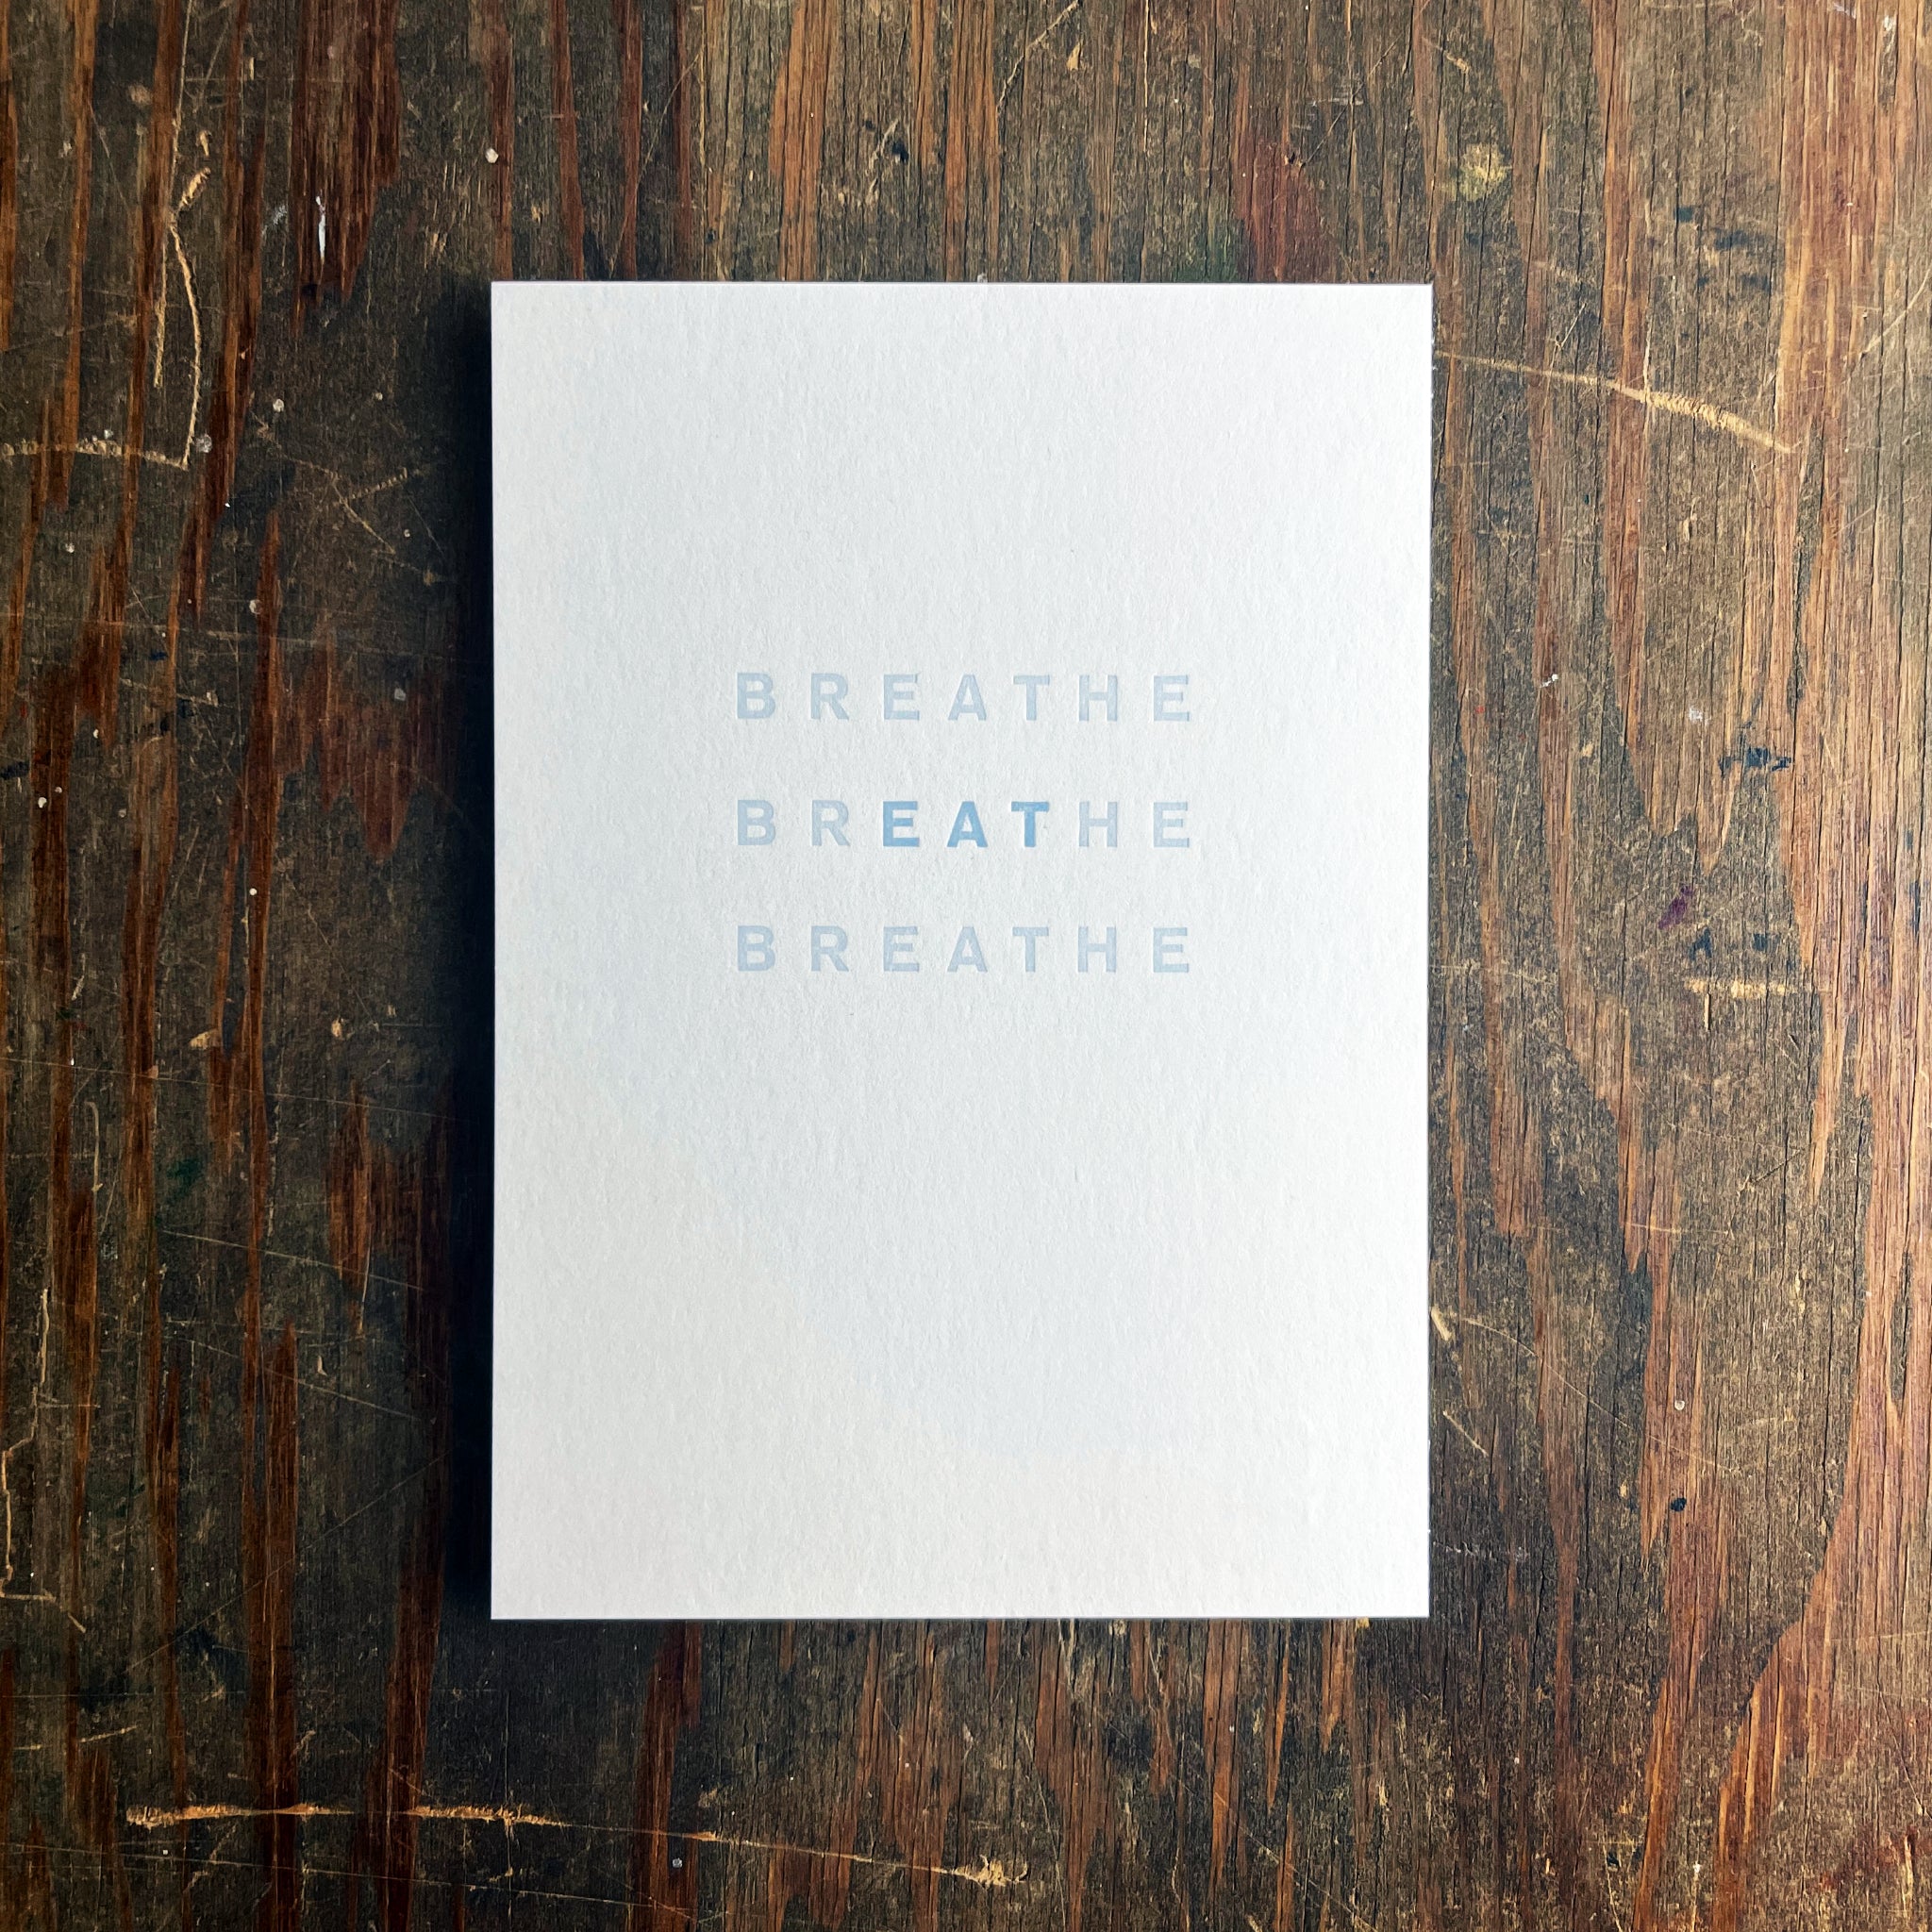 Breathe/eat